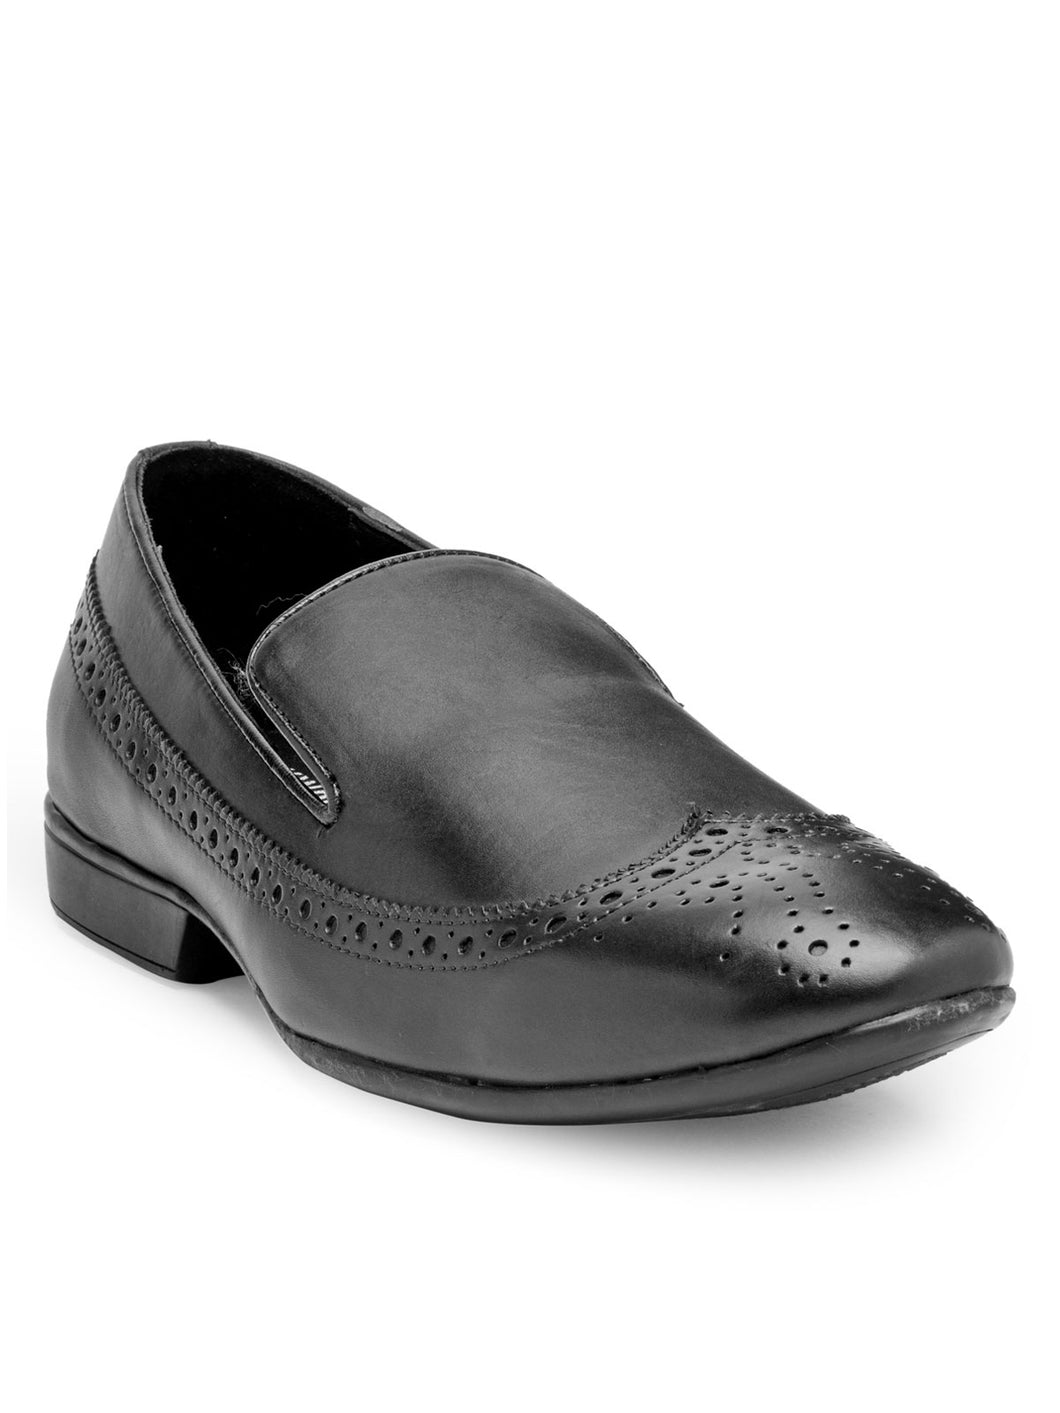 Teakwood Leather Men's Black Slip-ons Shoes